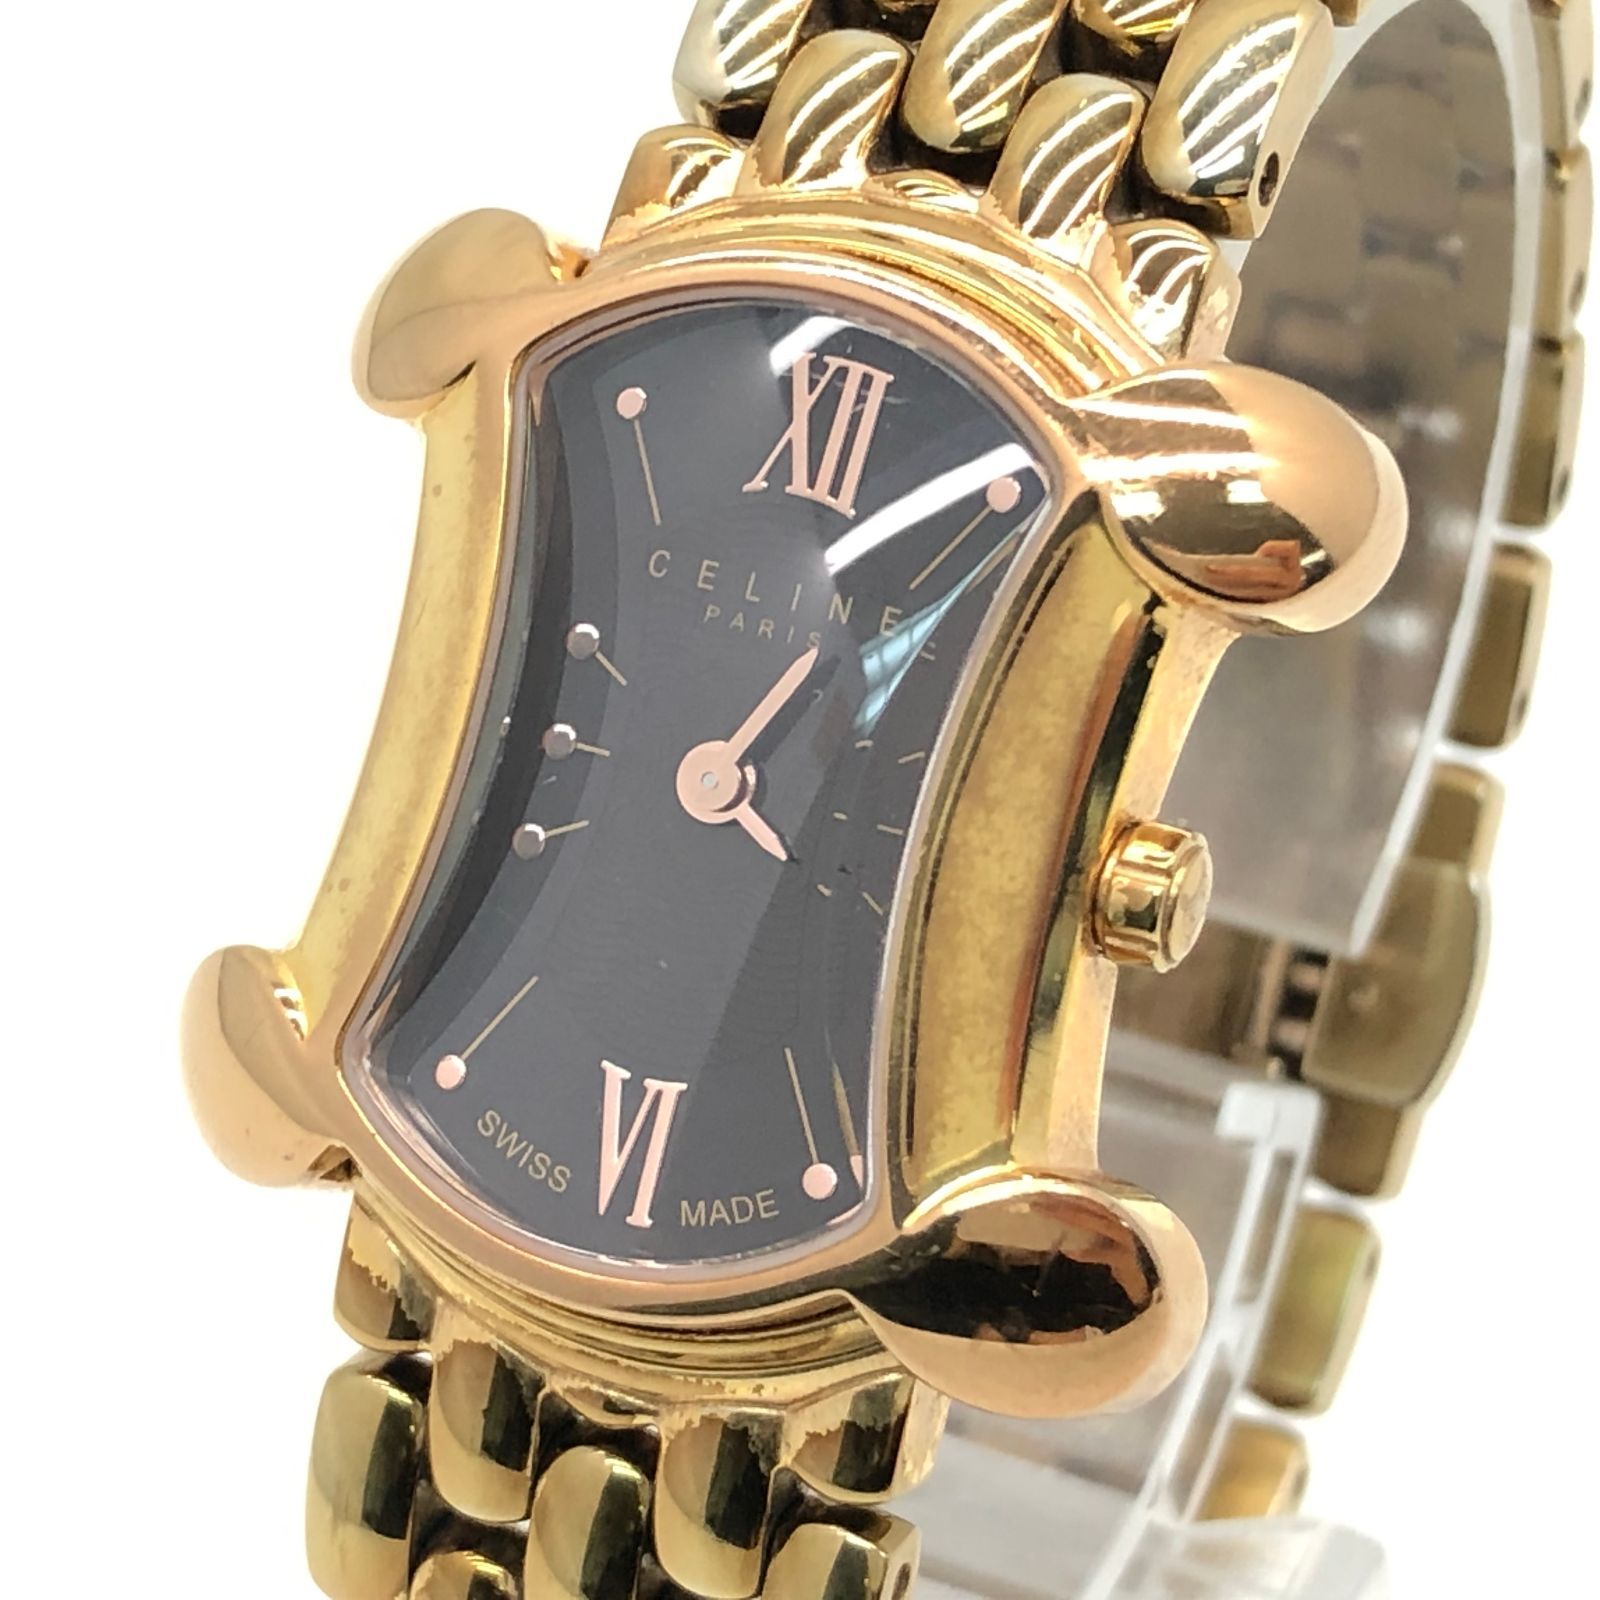 CELINE セリーヌ マカダム 30M/100FT ブラゾン 腕時計 ピンクゴールド ...